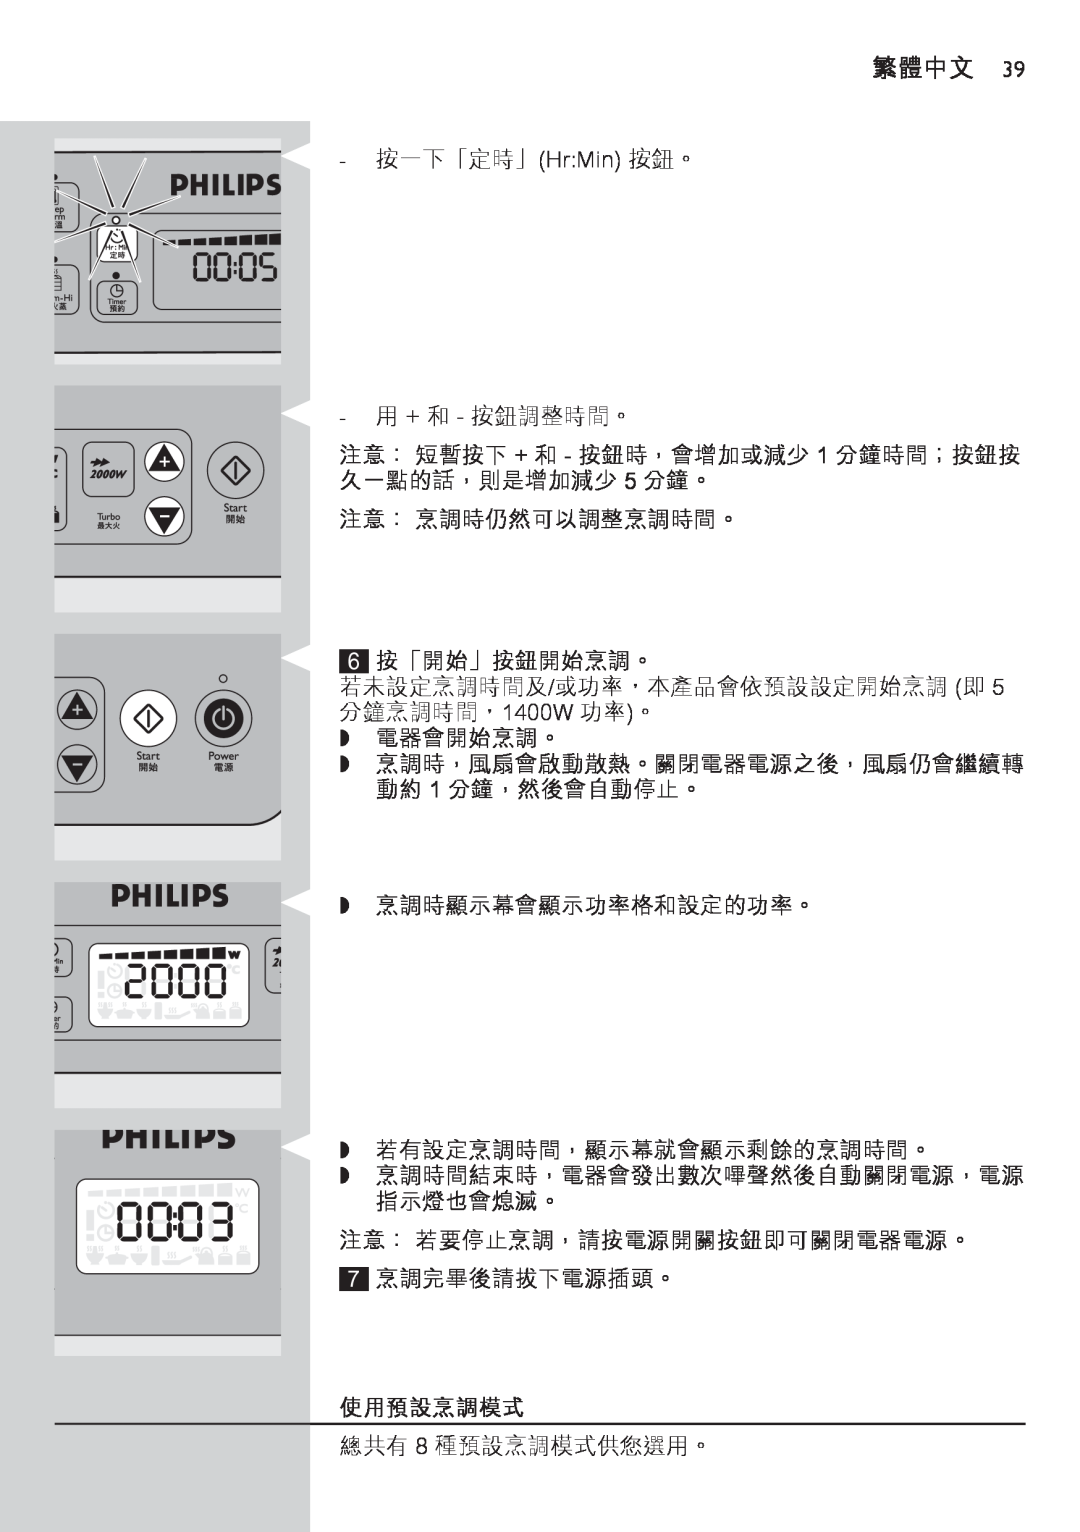 Philips HD4918 繁體中文, 按一下「定時」HrMin 按鈕。 用 + 和 - 按鈕調整時間。, 注意： 短暫按下 + 和 - 按鈕時，會增加或減少 1 分鐘時間；按鈕按 久一點的話，則是增加減少 5 分鐘。, 使用預設烹調模式 